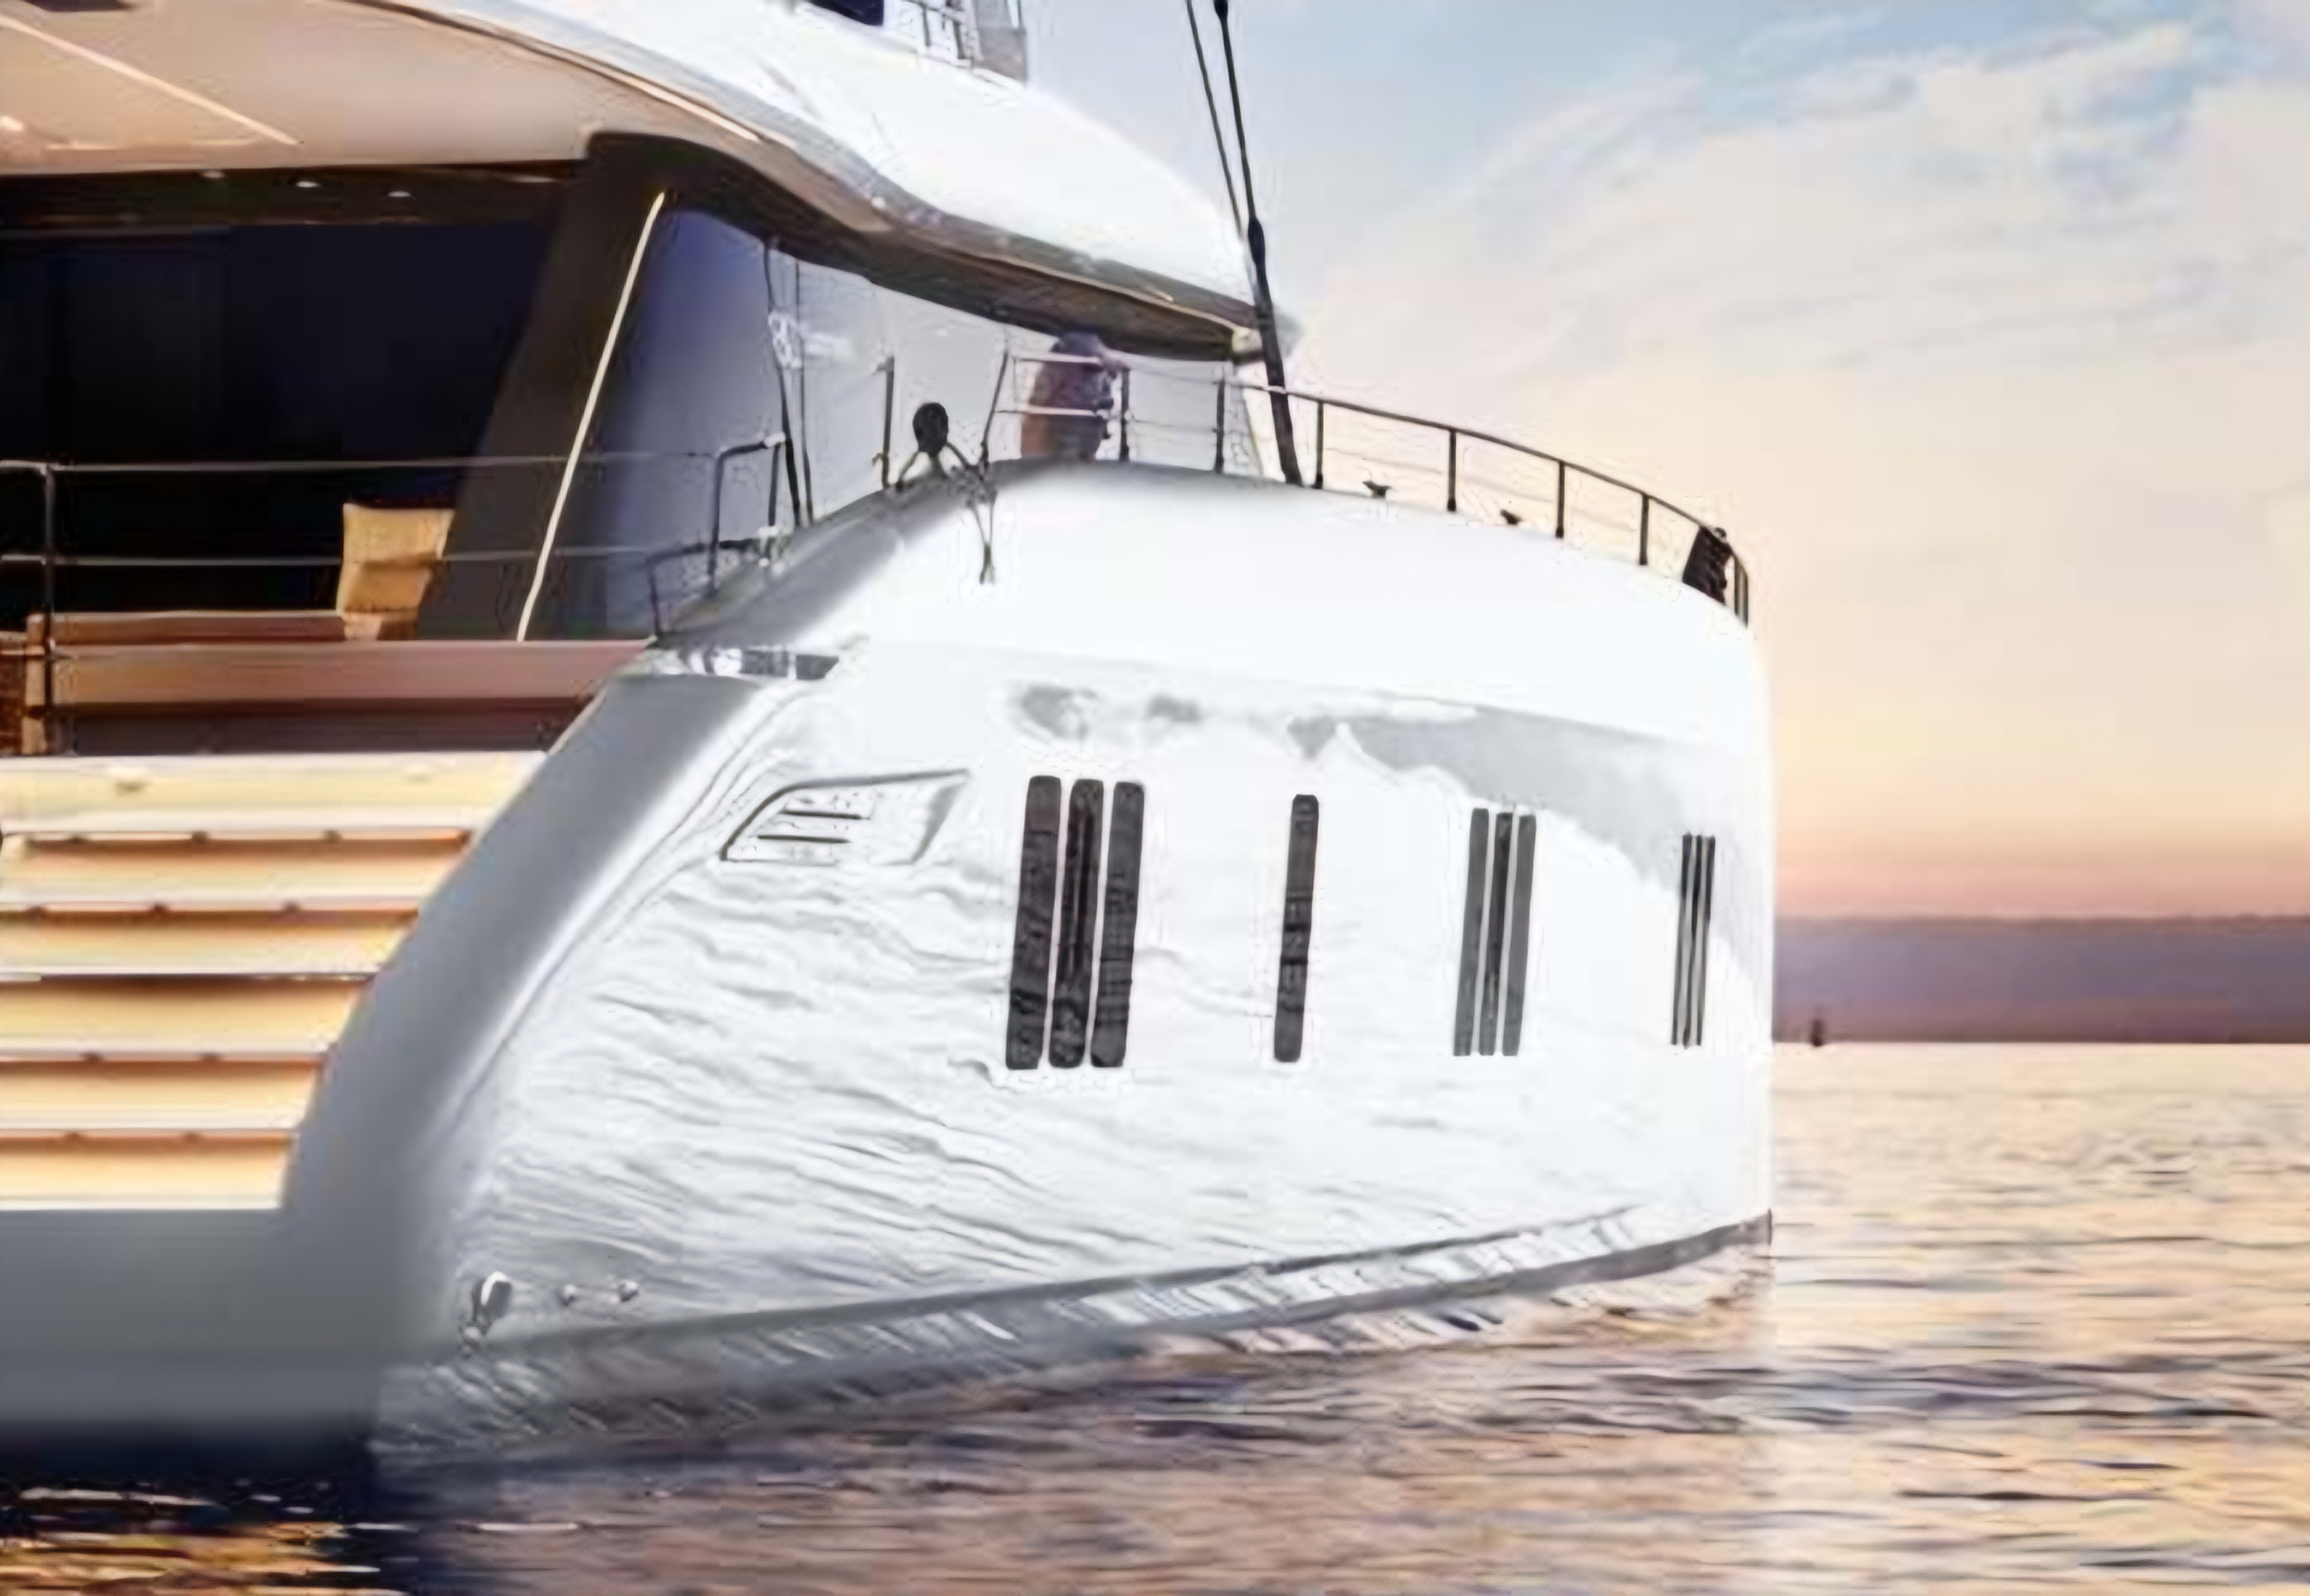 Tender - Cayman Yachts All model2025 Boatsize matter 